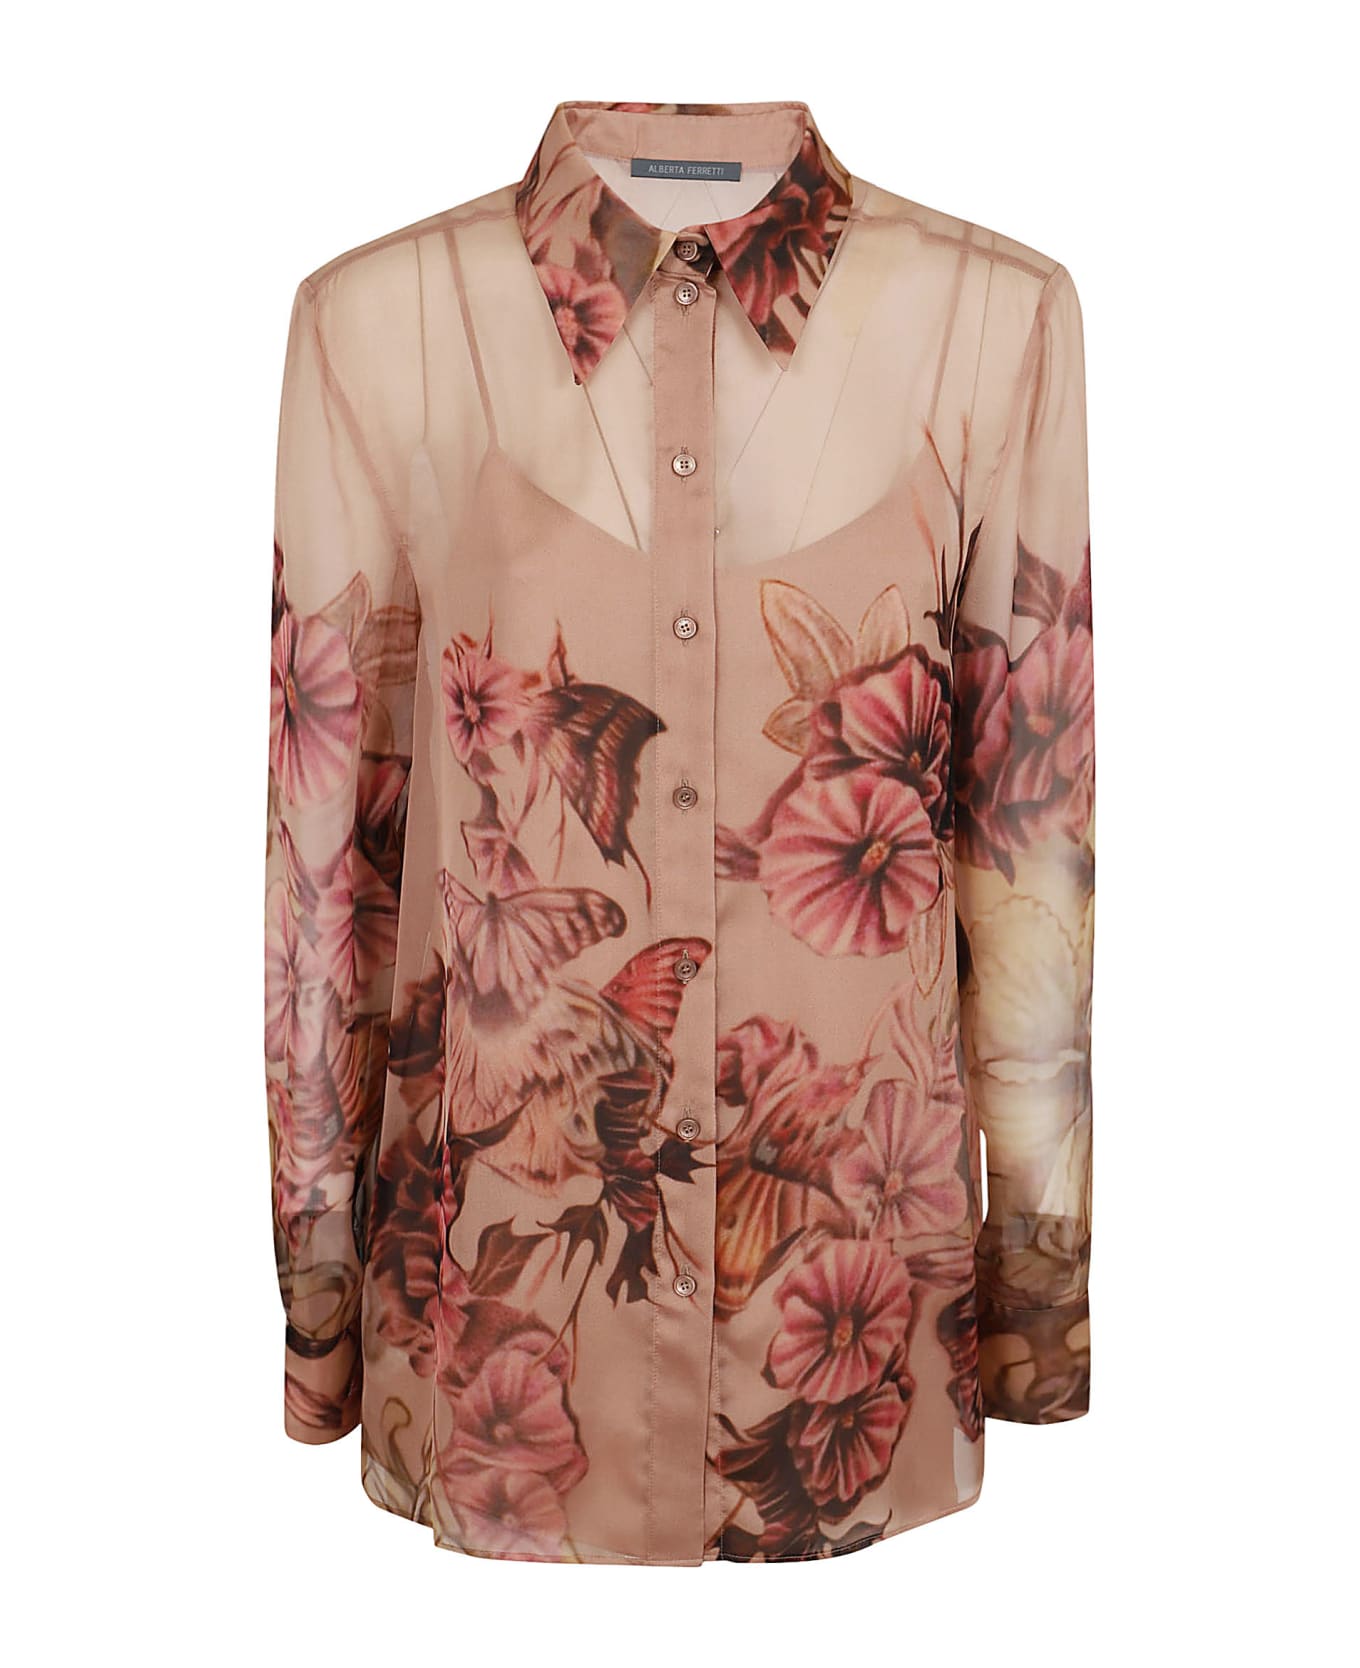 Alberta Ferretti Printed Chiffon Shirt - Fantasia Rosa